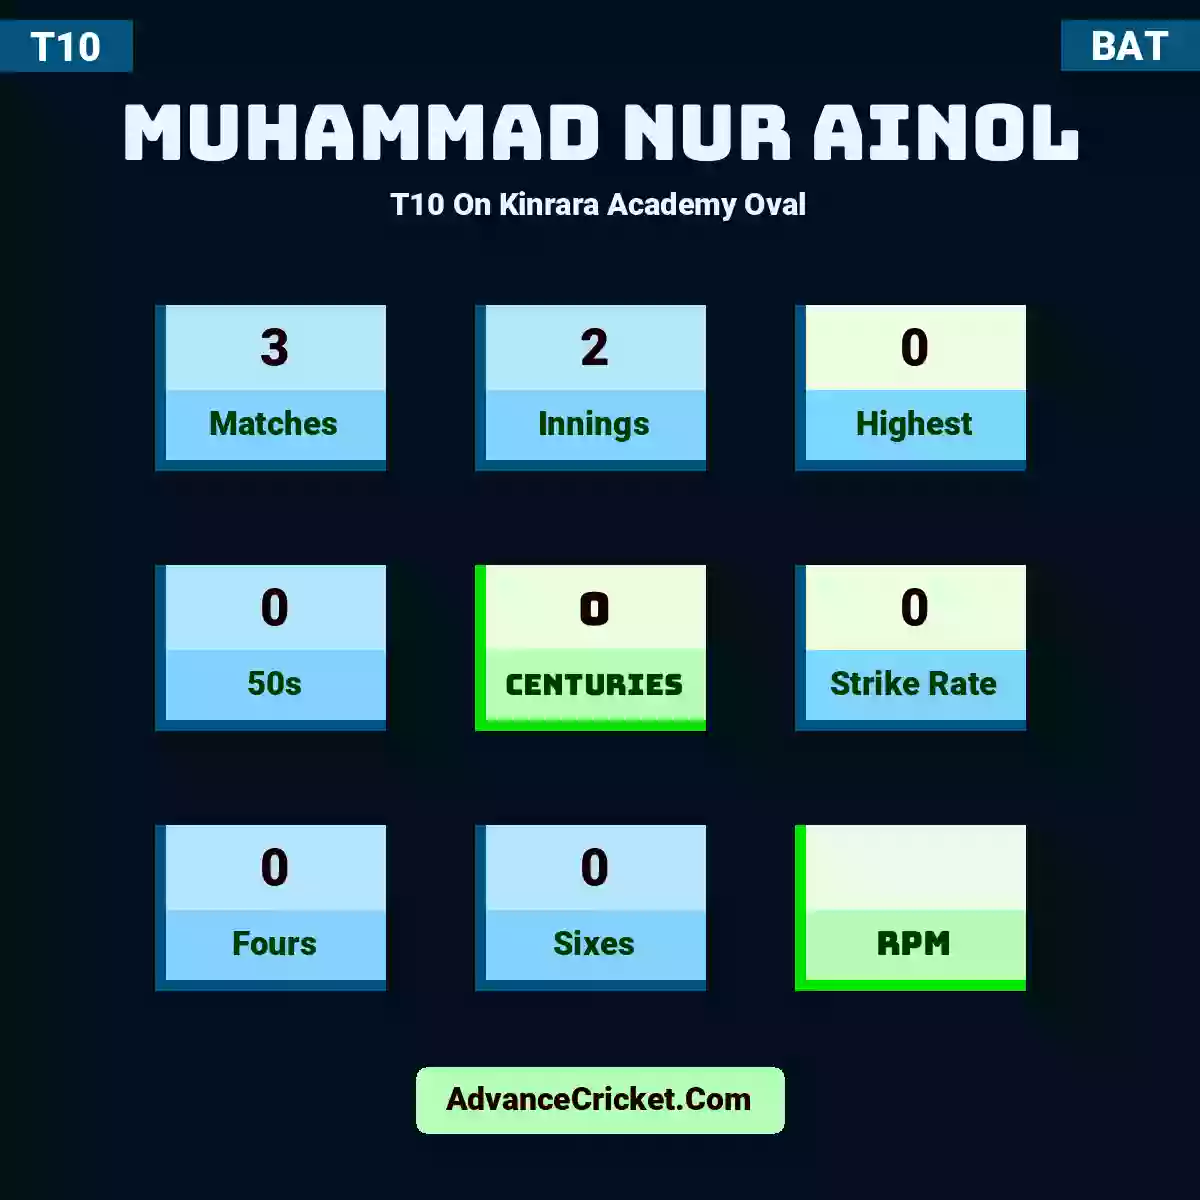 Muhammad Nur Ainol T10  On Kinrara Academy Oval, Muhammad Nur Ainol played 3 matches, scored 0 runs as highest, 0 half-centuries, and 0 centuries, with a strike rate of 0. M.Ainol hit 0 fours and 0 sixes.